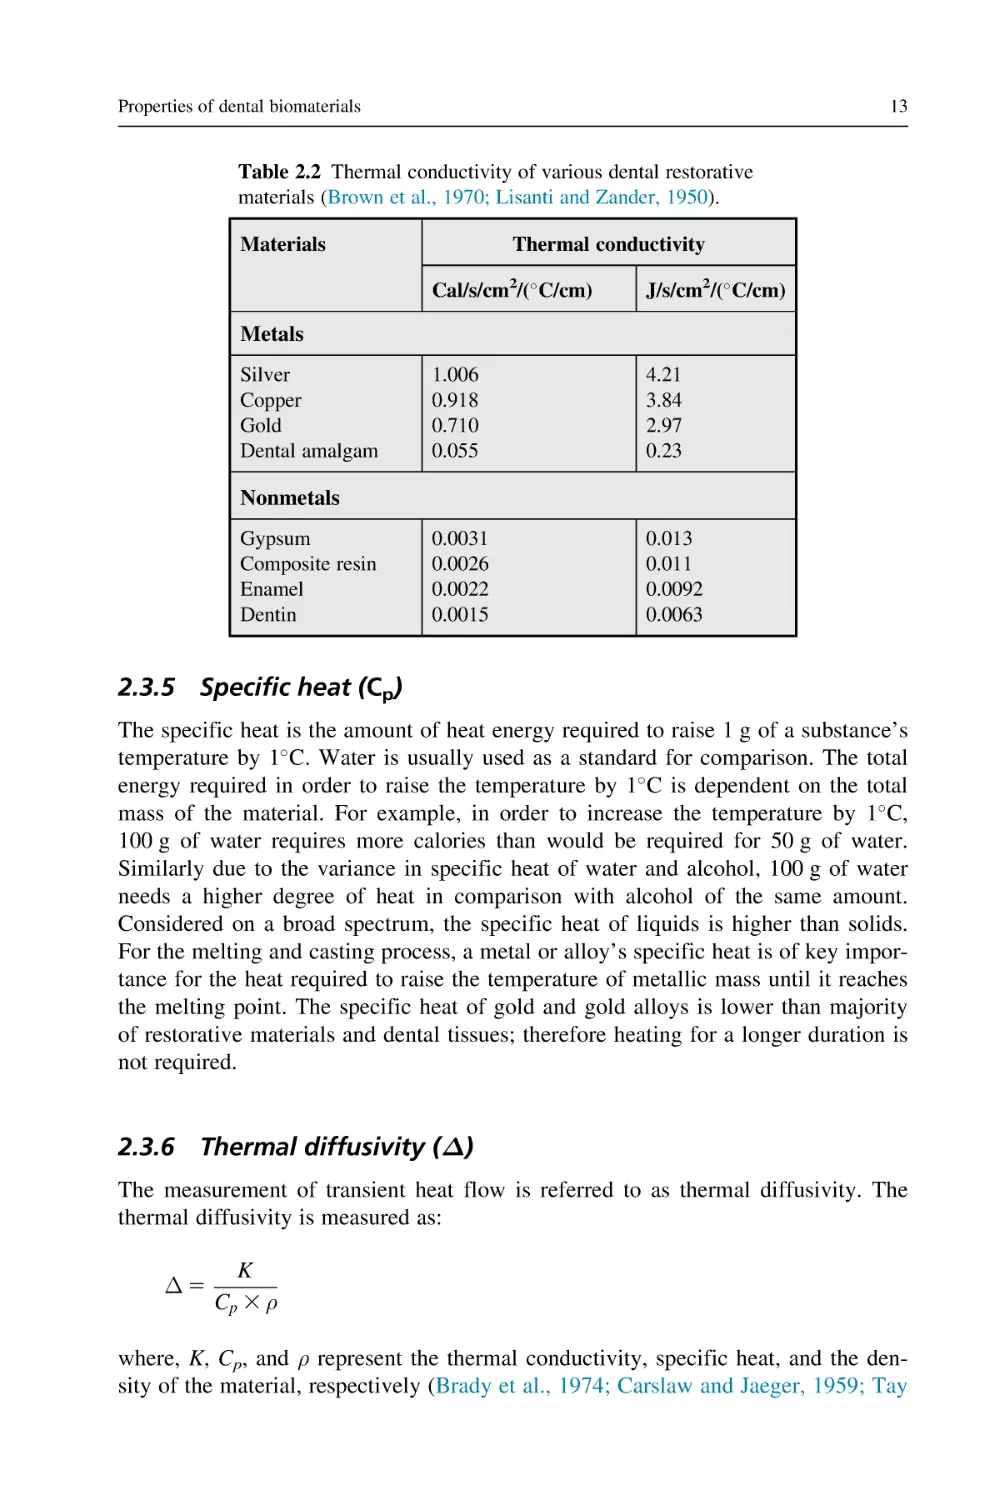 2.3.5 Specific heat (Cp)
2.3.6 Thermal diffusivity (Δ)